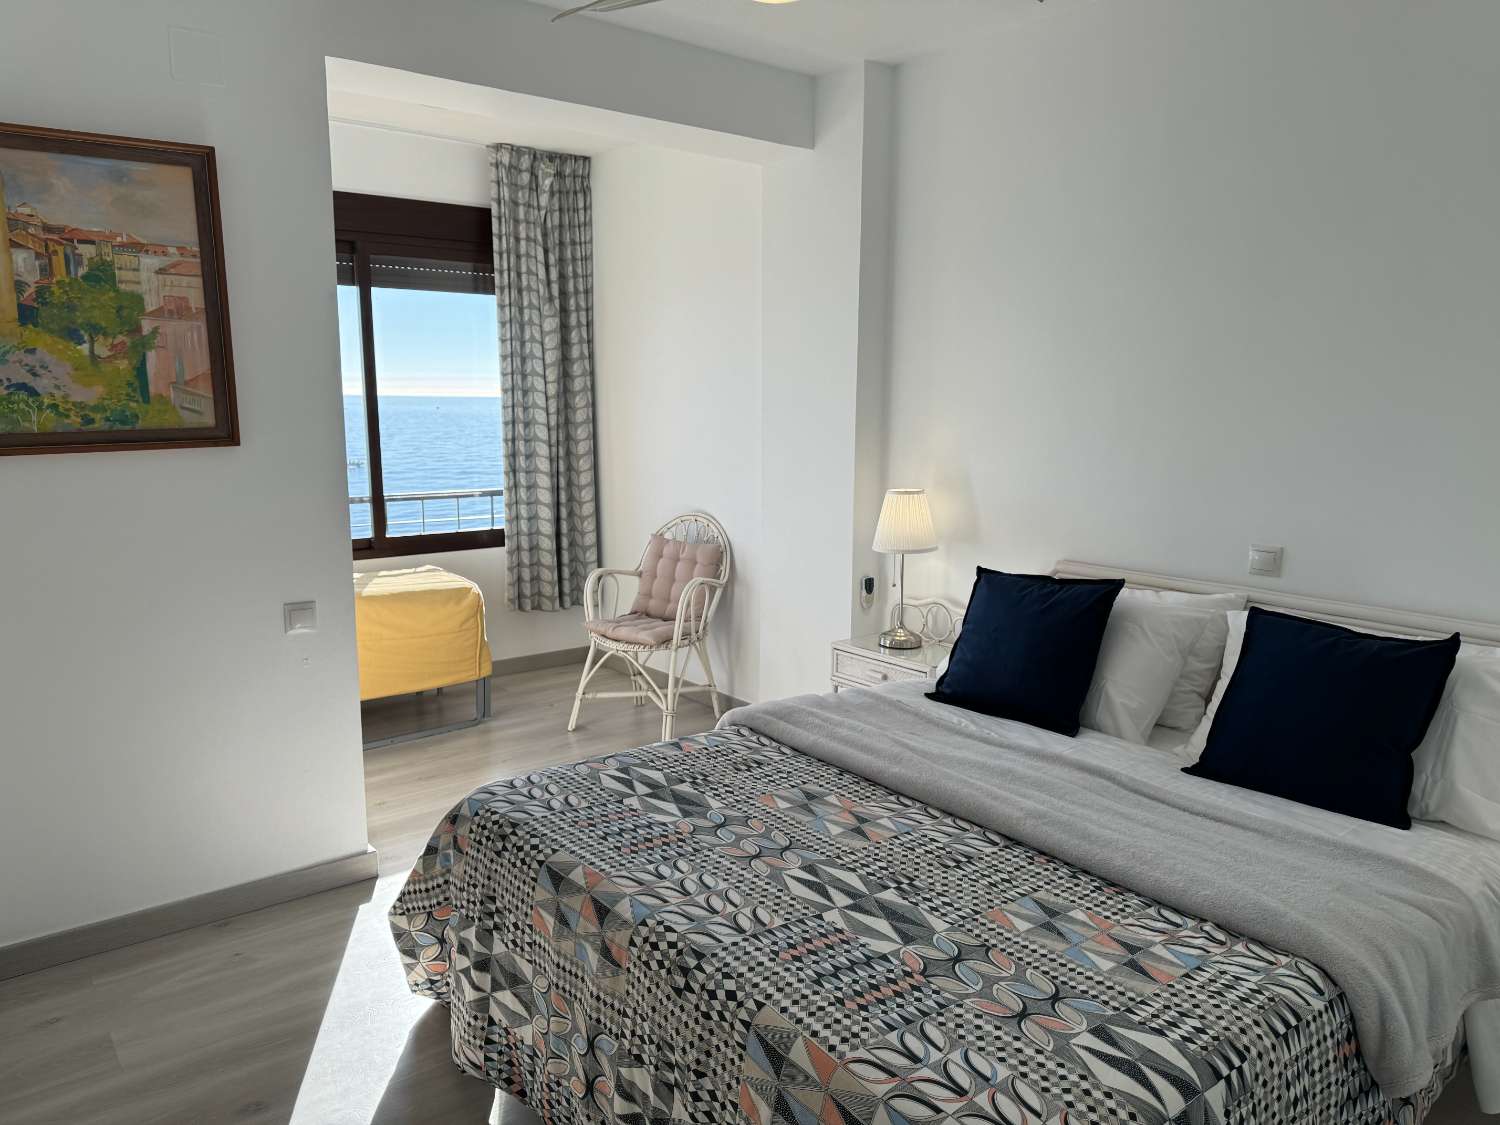 "Renovated Seaside Home in Fuengirola: Your Perfect Coastal Retreat"